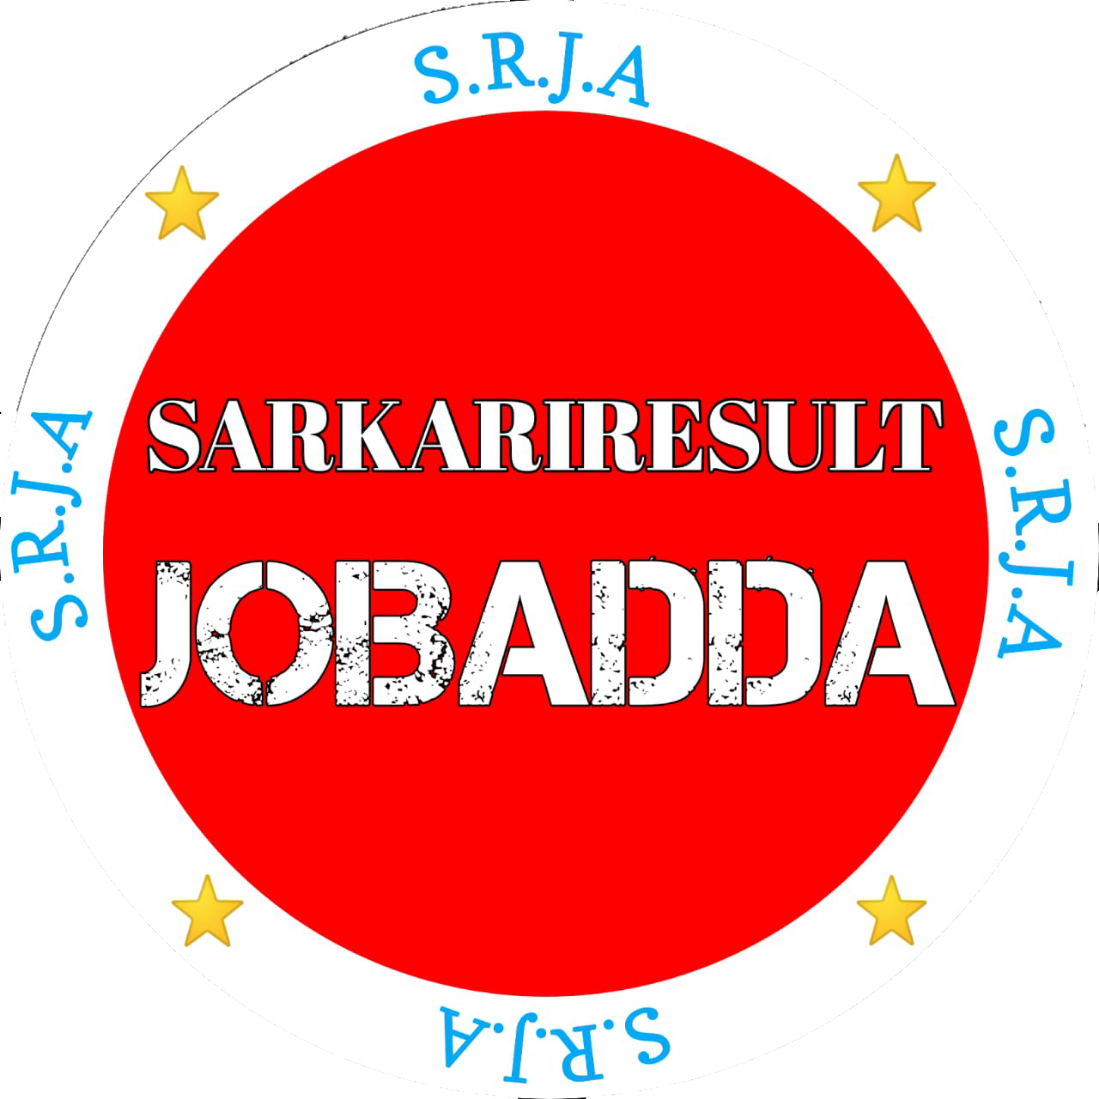 SarkariResult Jobadda | सरकारी रिजल्ट जॉब अड्डा |Sarkari Result Job Adda|Online Form |Results 2022